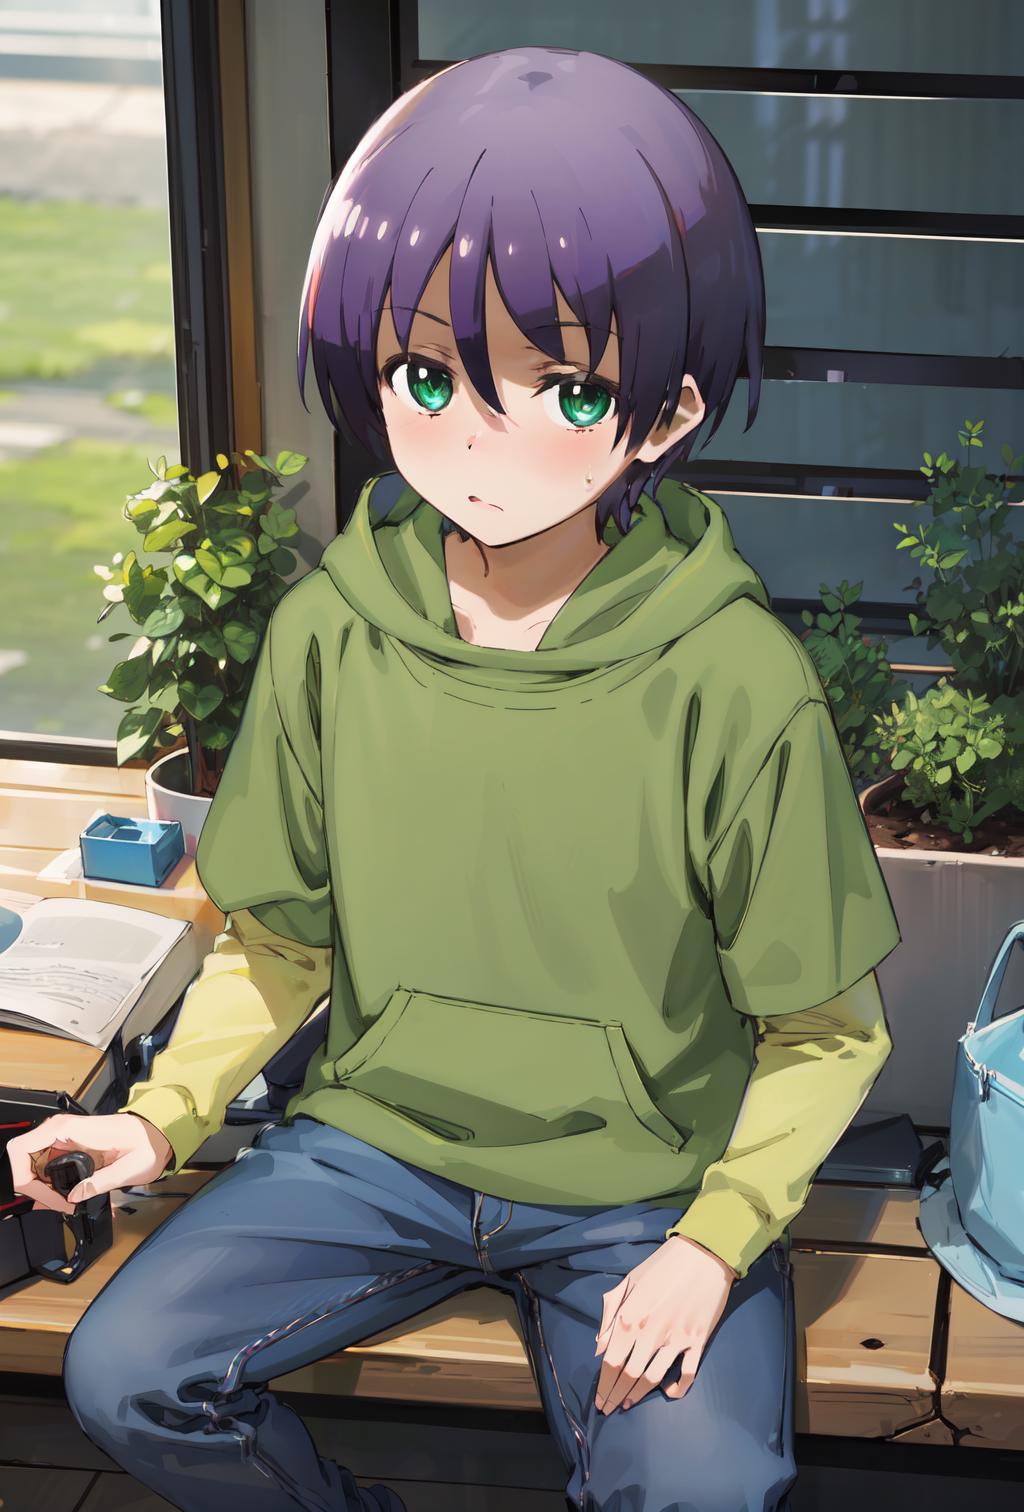 Tonikaku Kawaii Episode 1 Discussion & Gallery - Anime Shelter | Anime,  Cute anime wallpaper, Kawaii anime